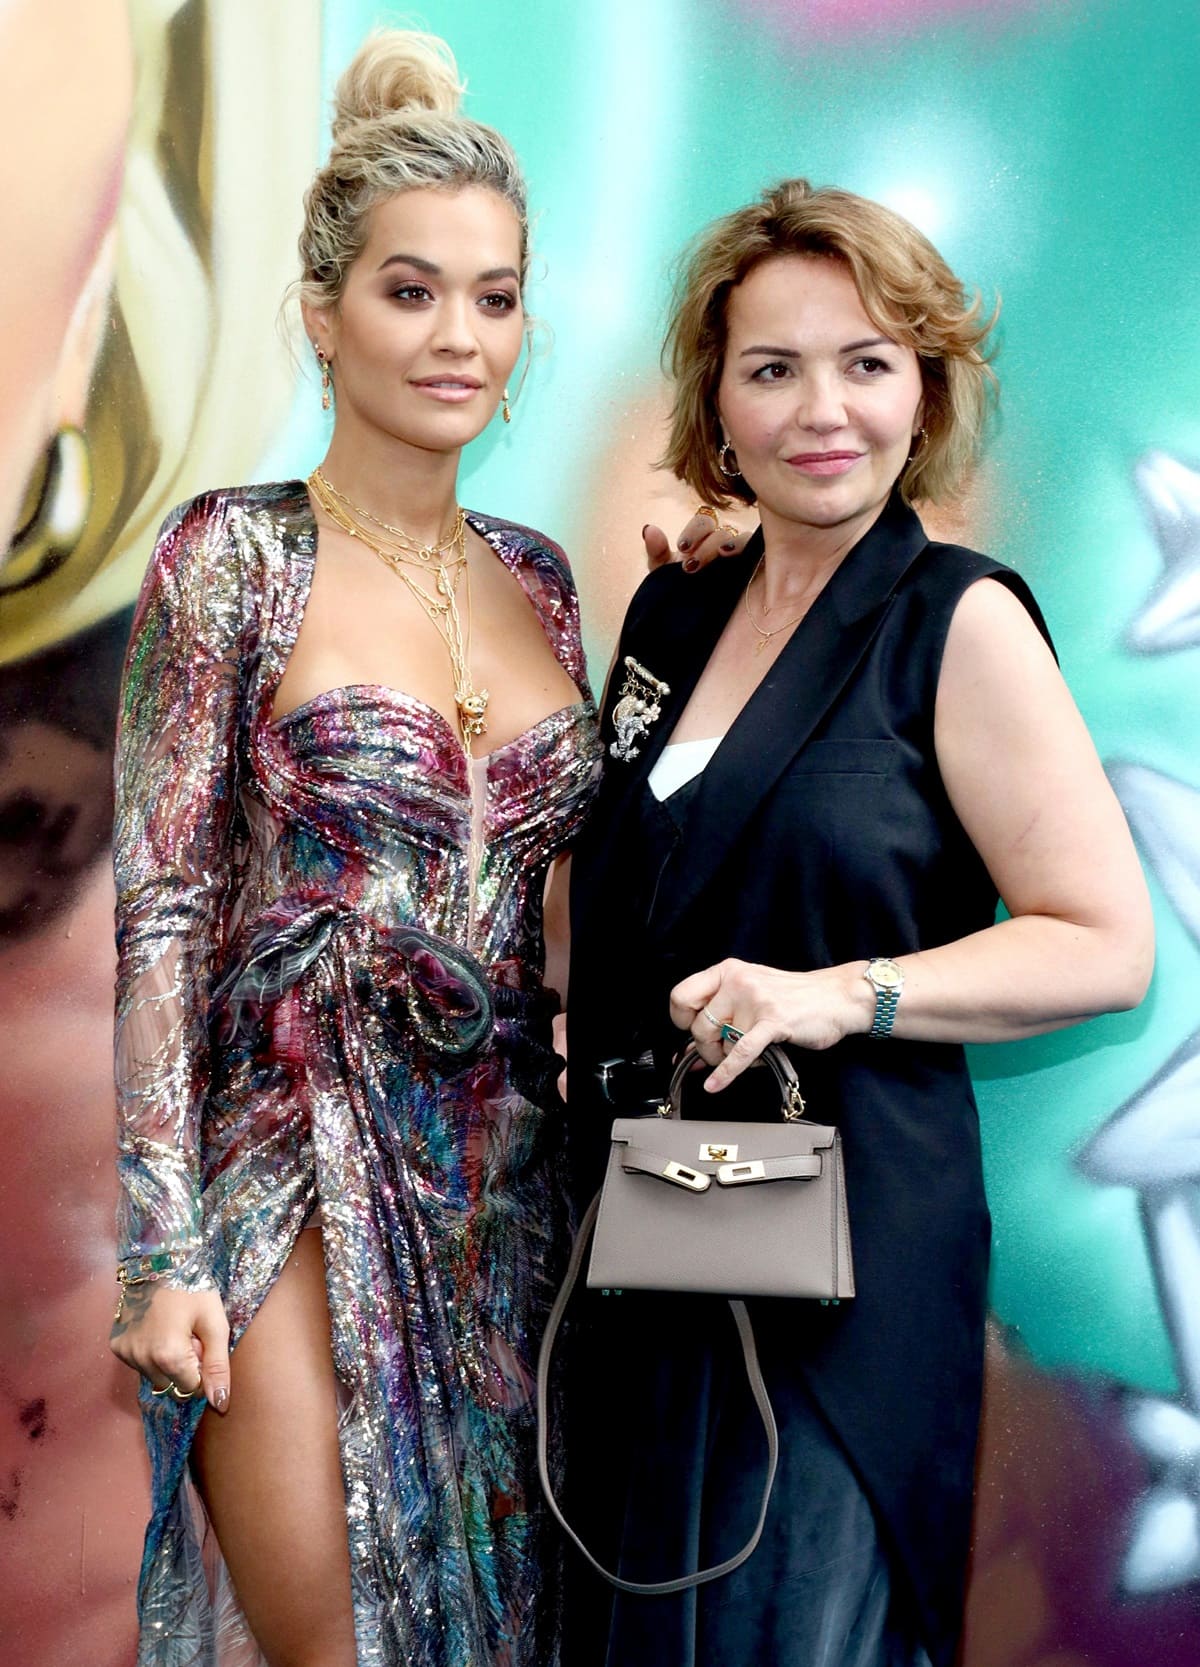 Rita Ora's Albanian mother, Vera Sahatçiu, is a Catholic psychiatrist who was born in Kosovo